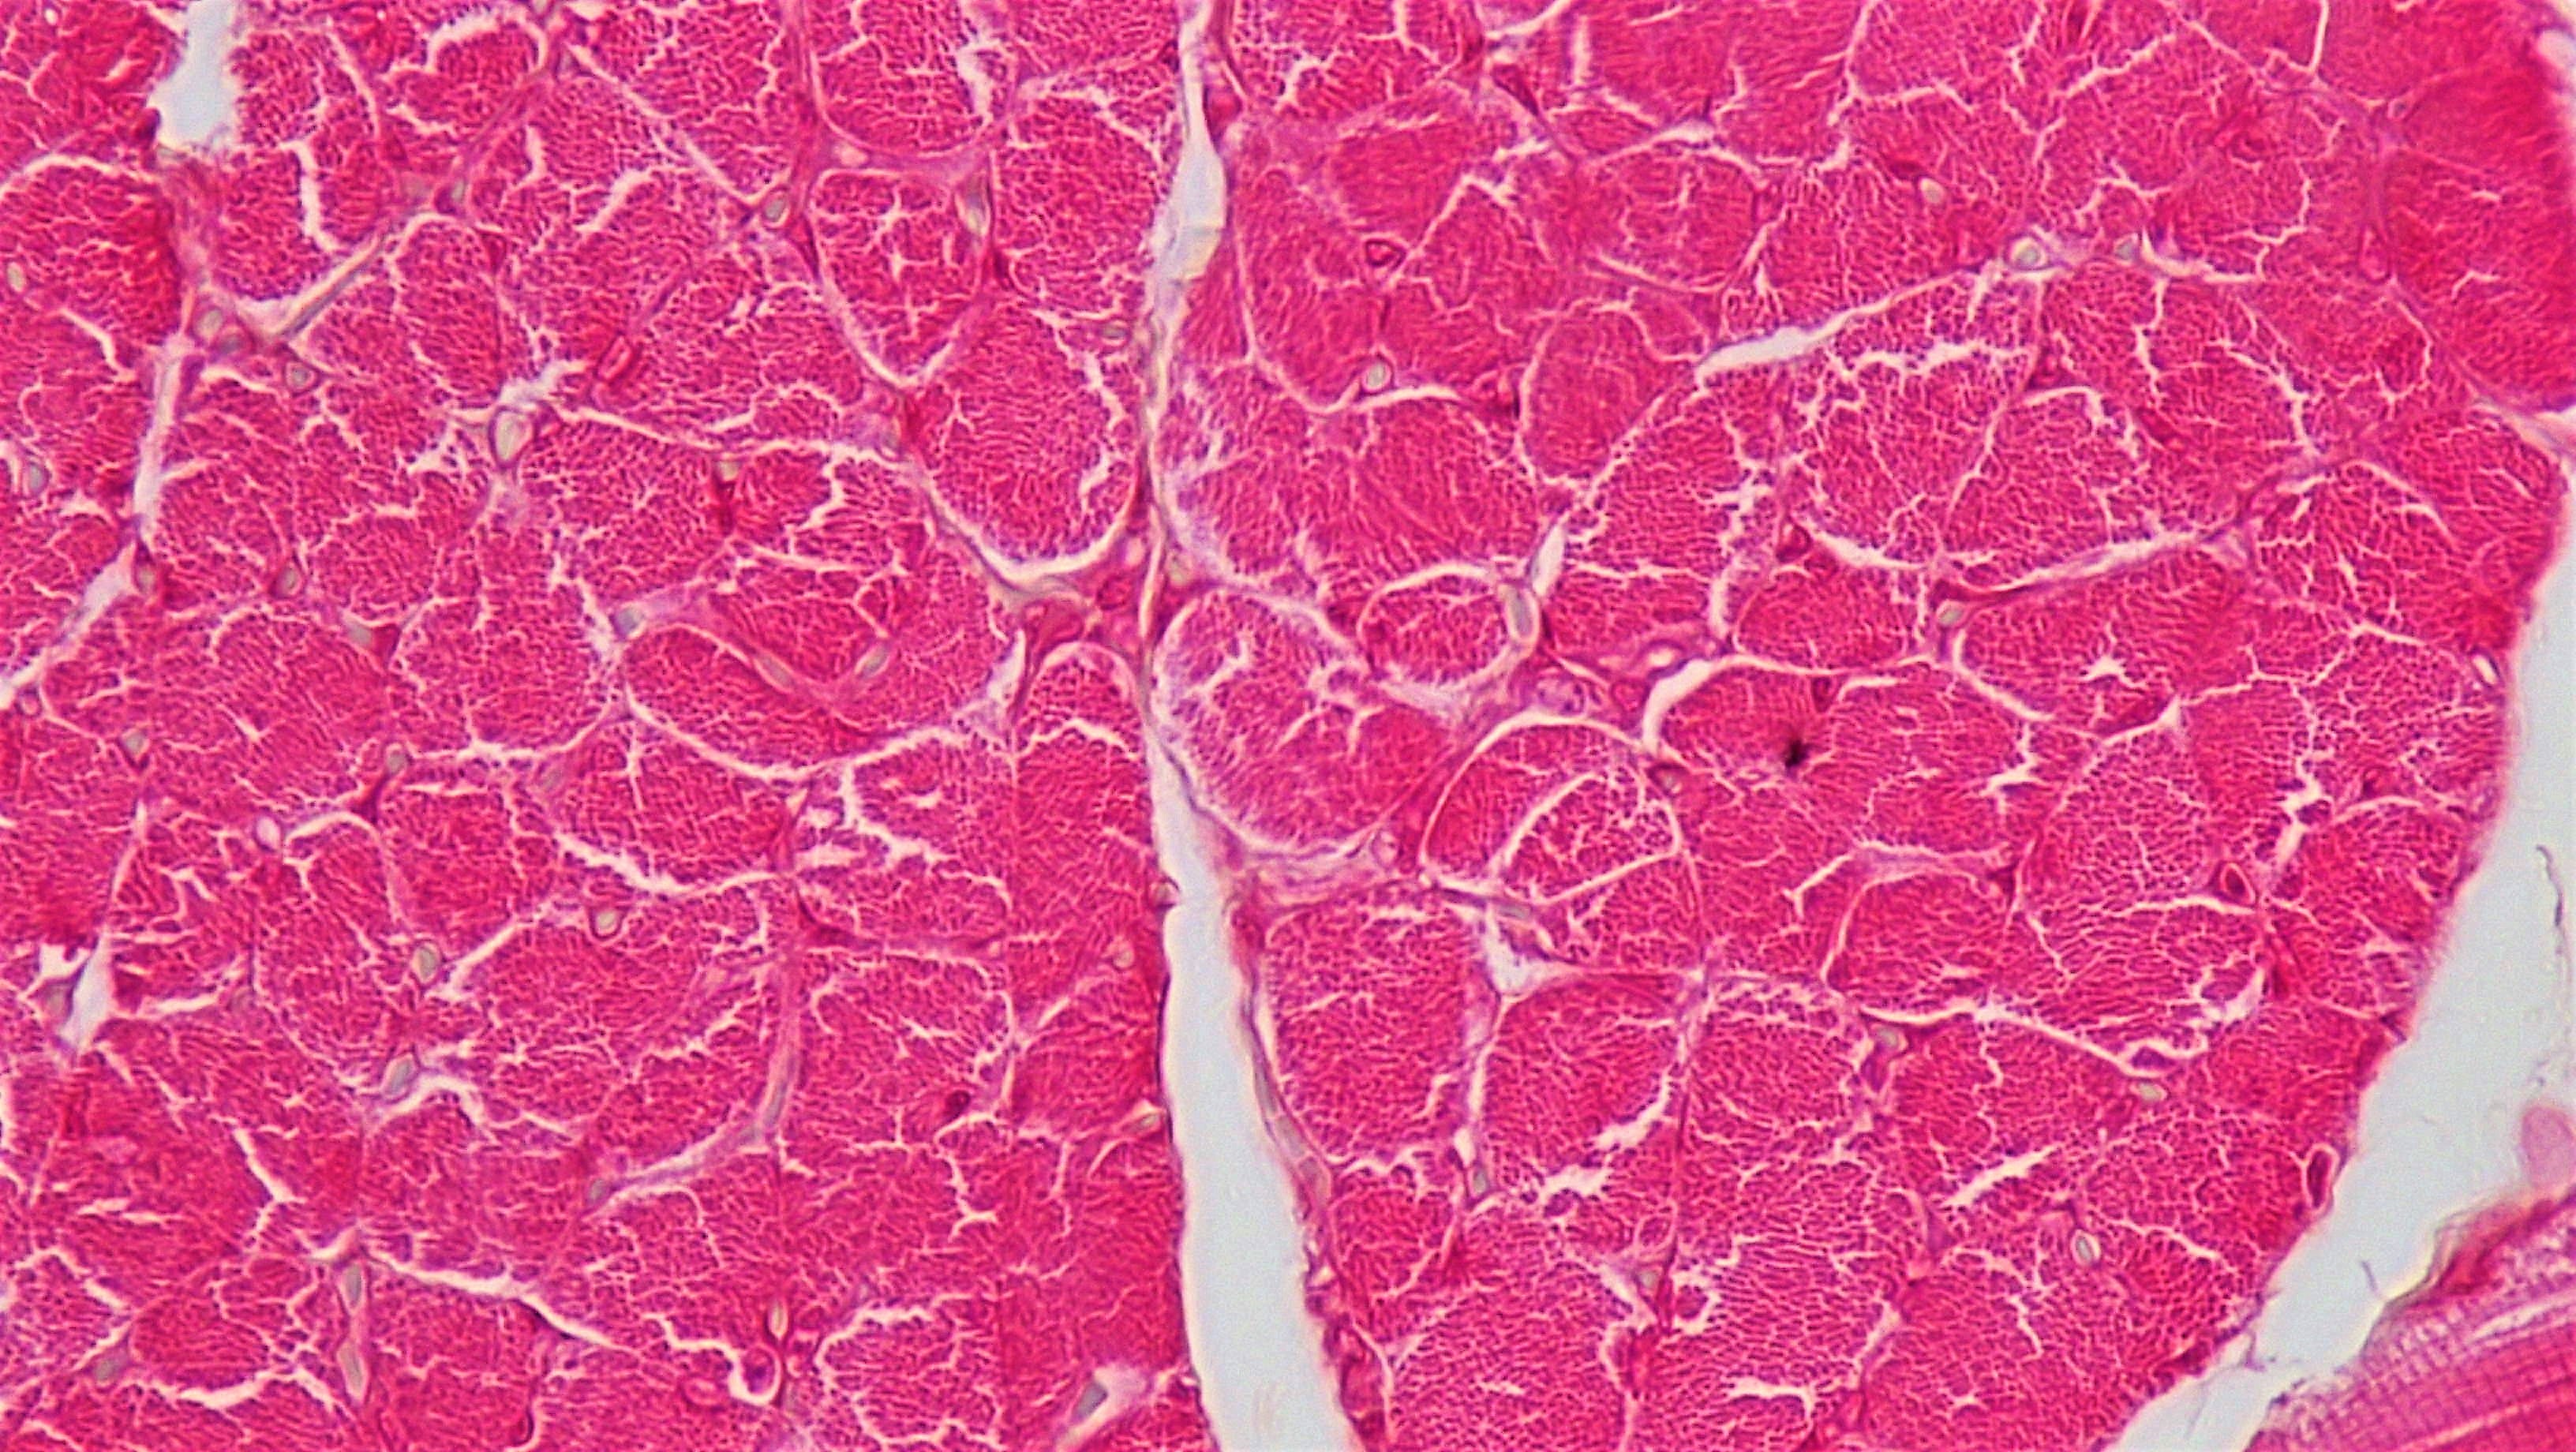 Mammalian Histology: Muscle Tissue – Berkshire Community College